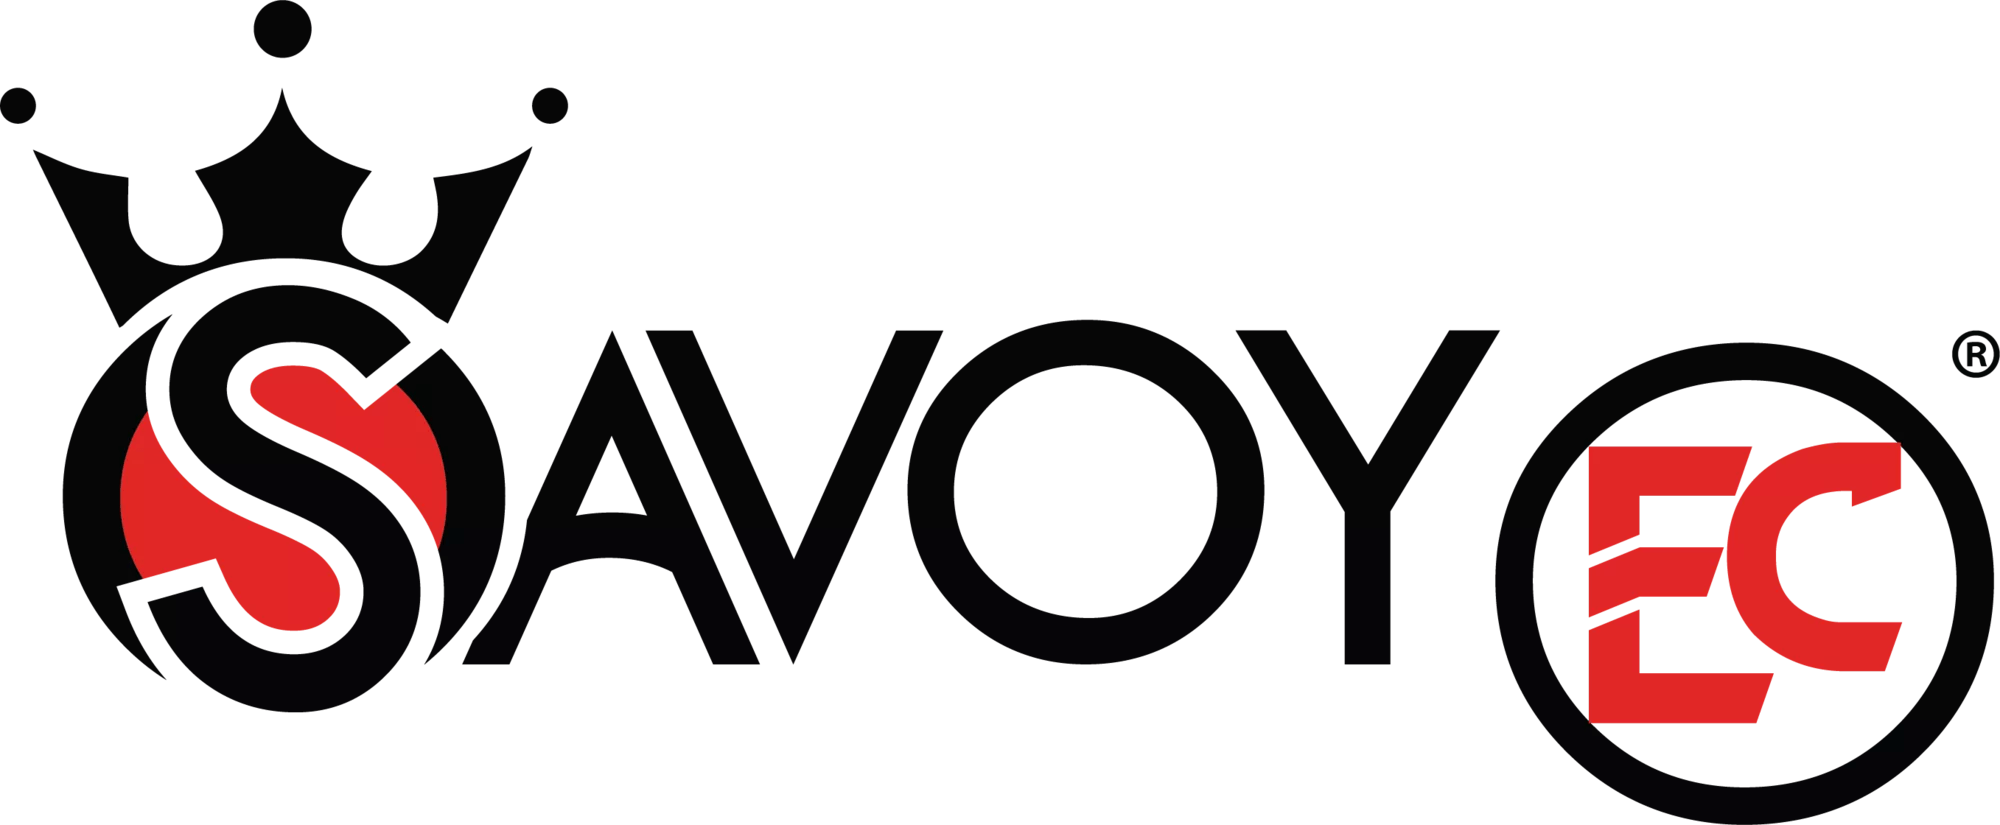 Savoy EC